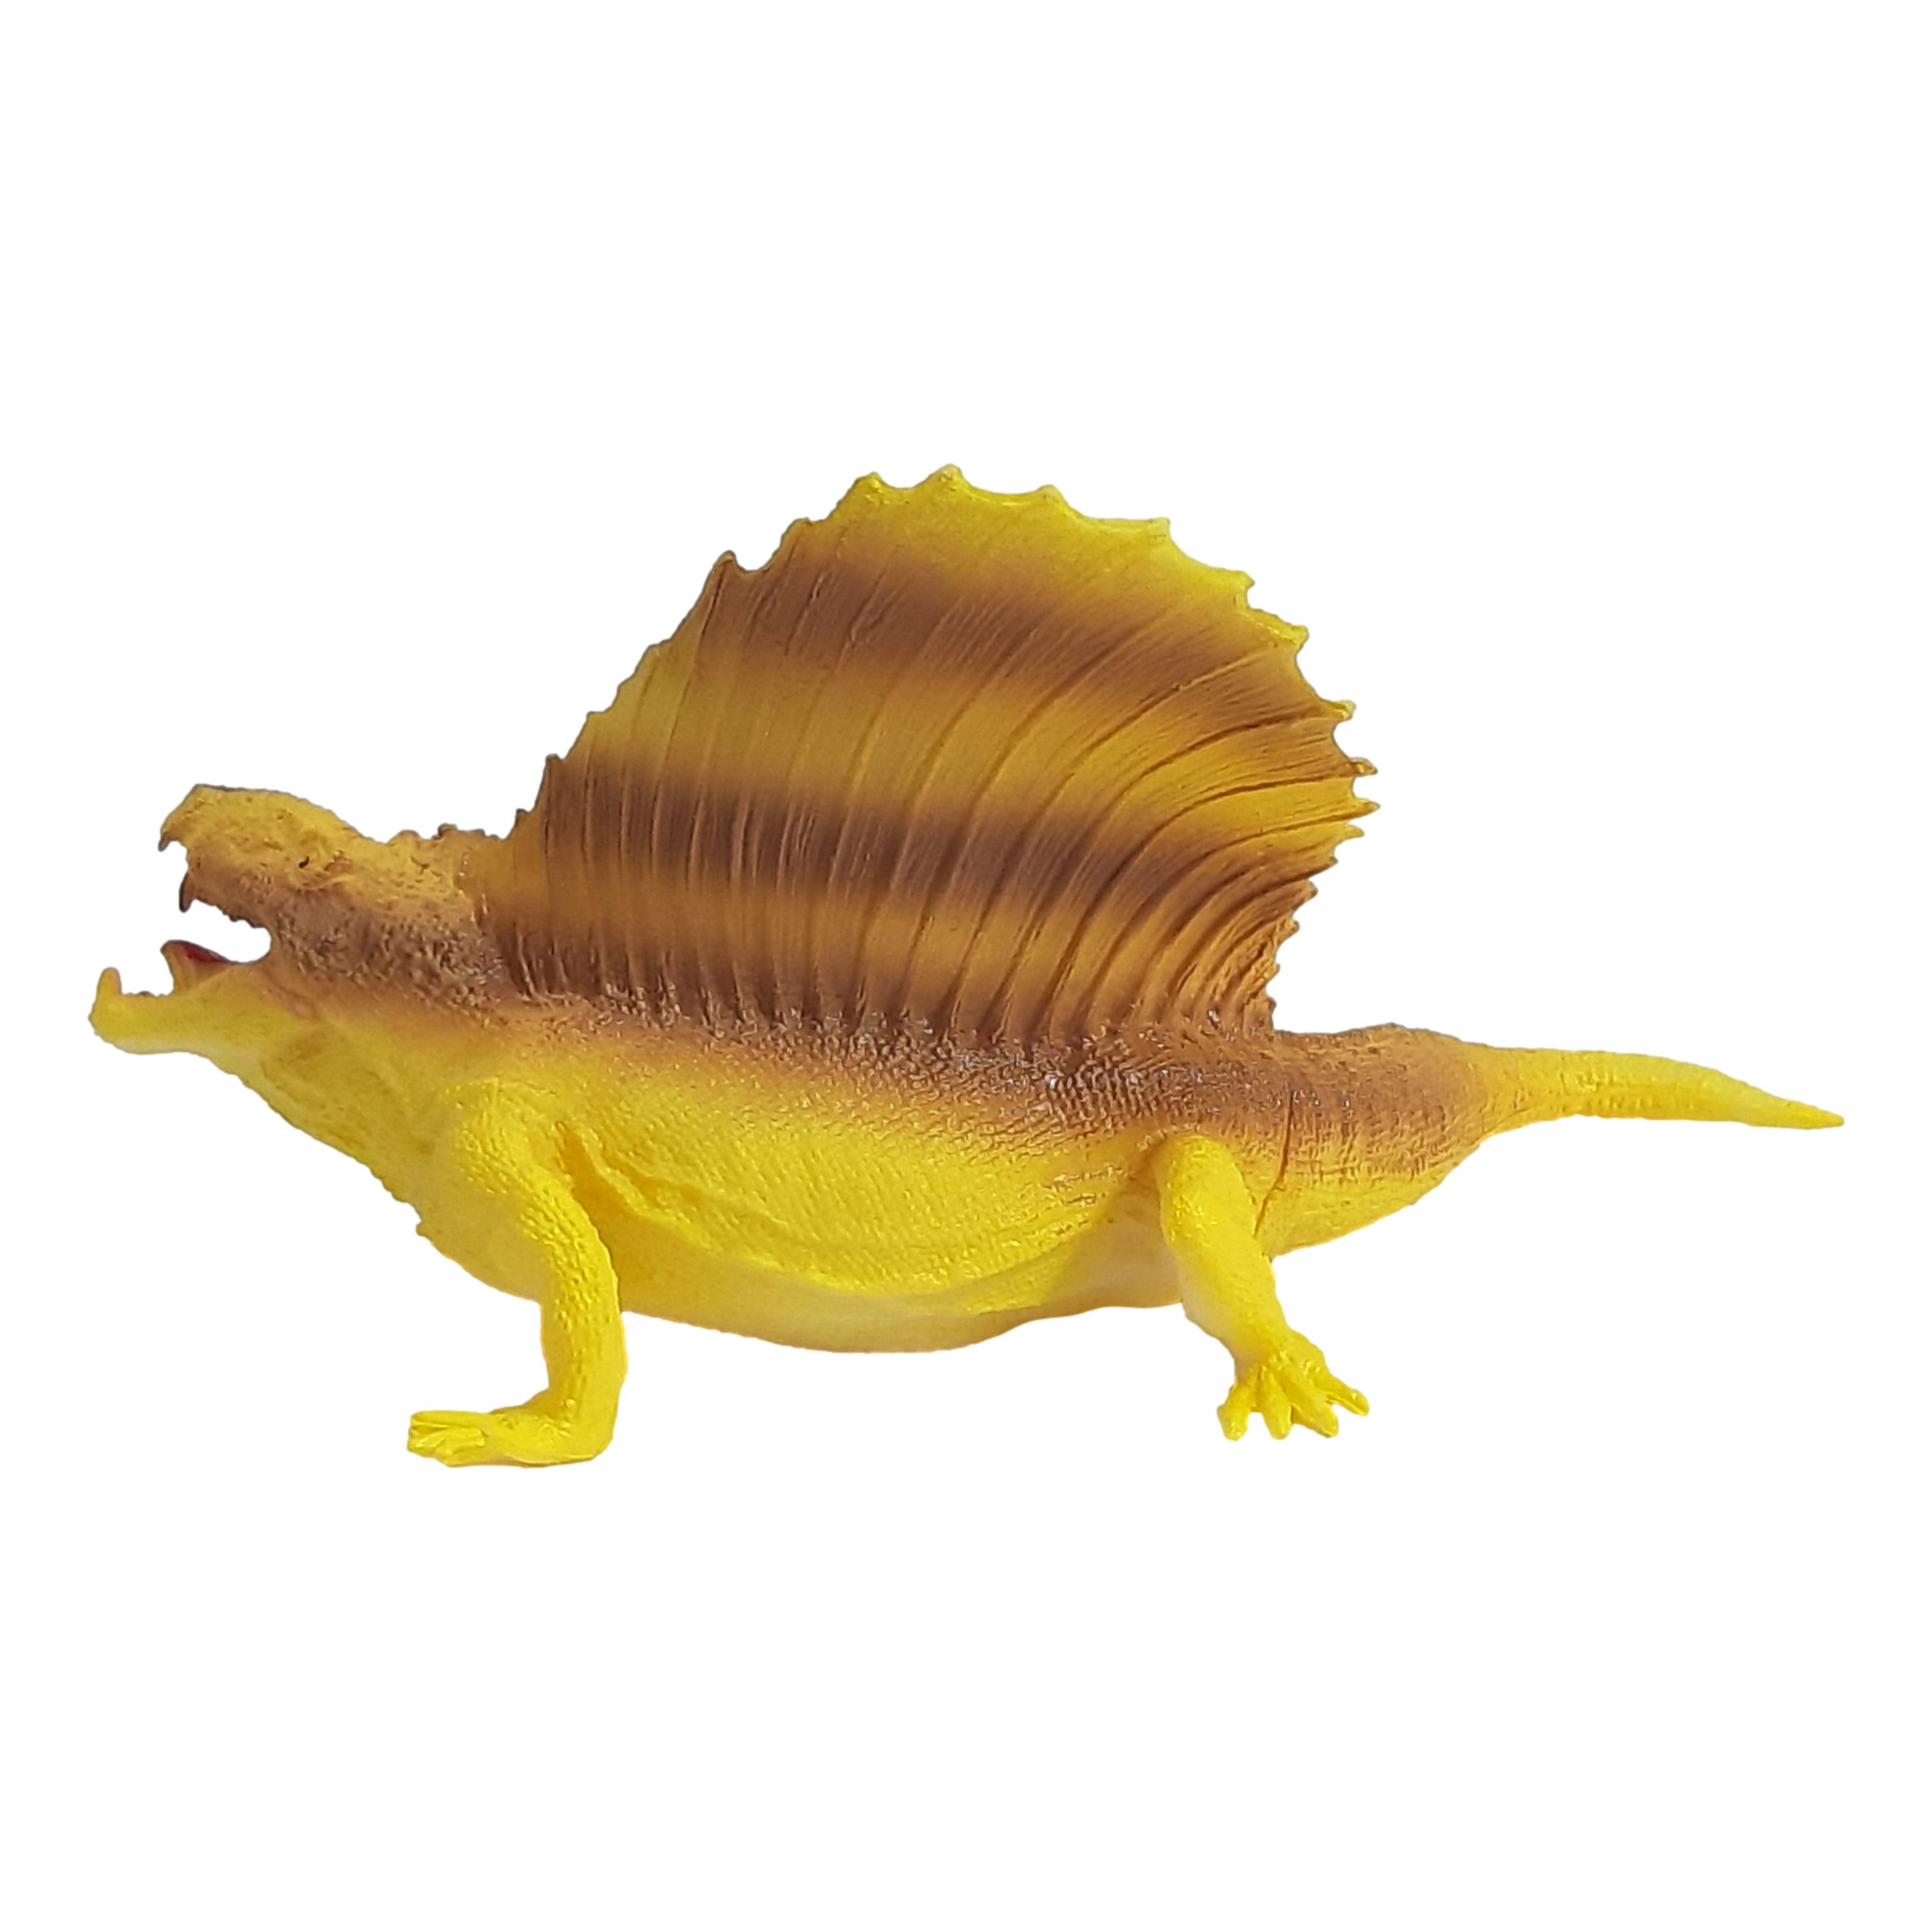 Figurina Dinozaur de Colectie, Dimensiune 10 cm, Model Realist, Galben